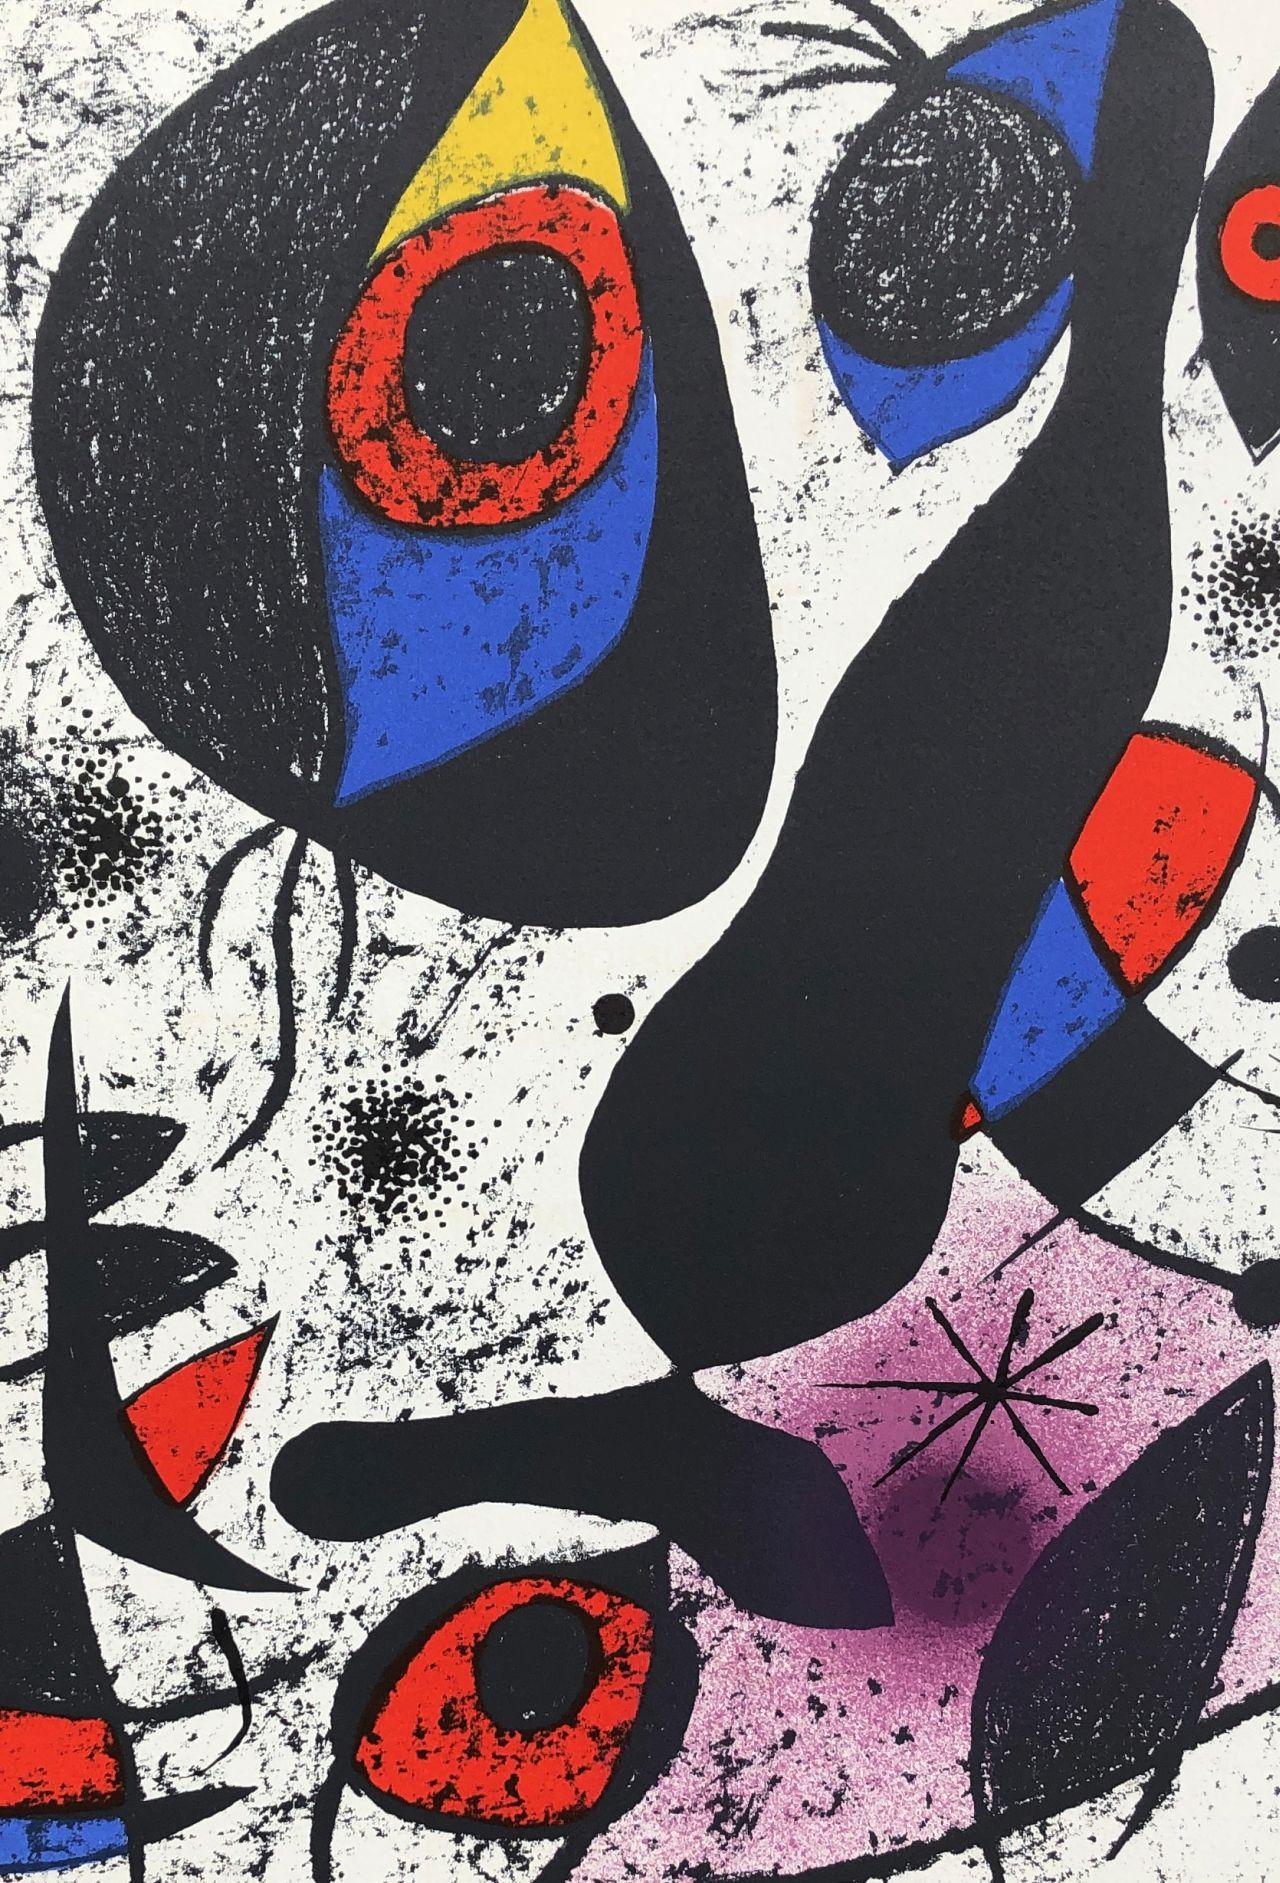 Abstract Bird - Original Lithograph (Mourlot #837) - Print by Joan Miró